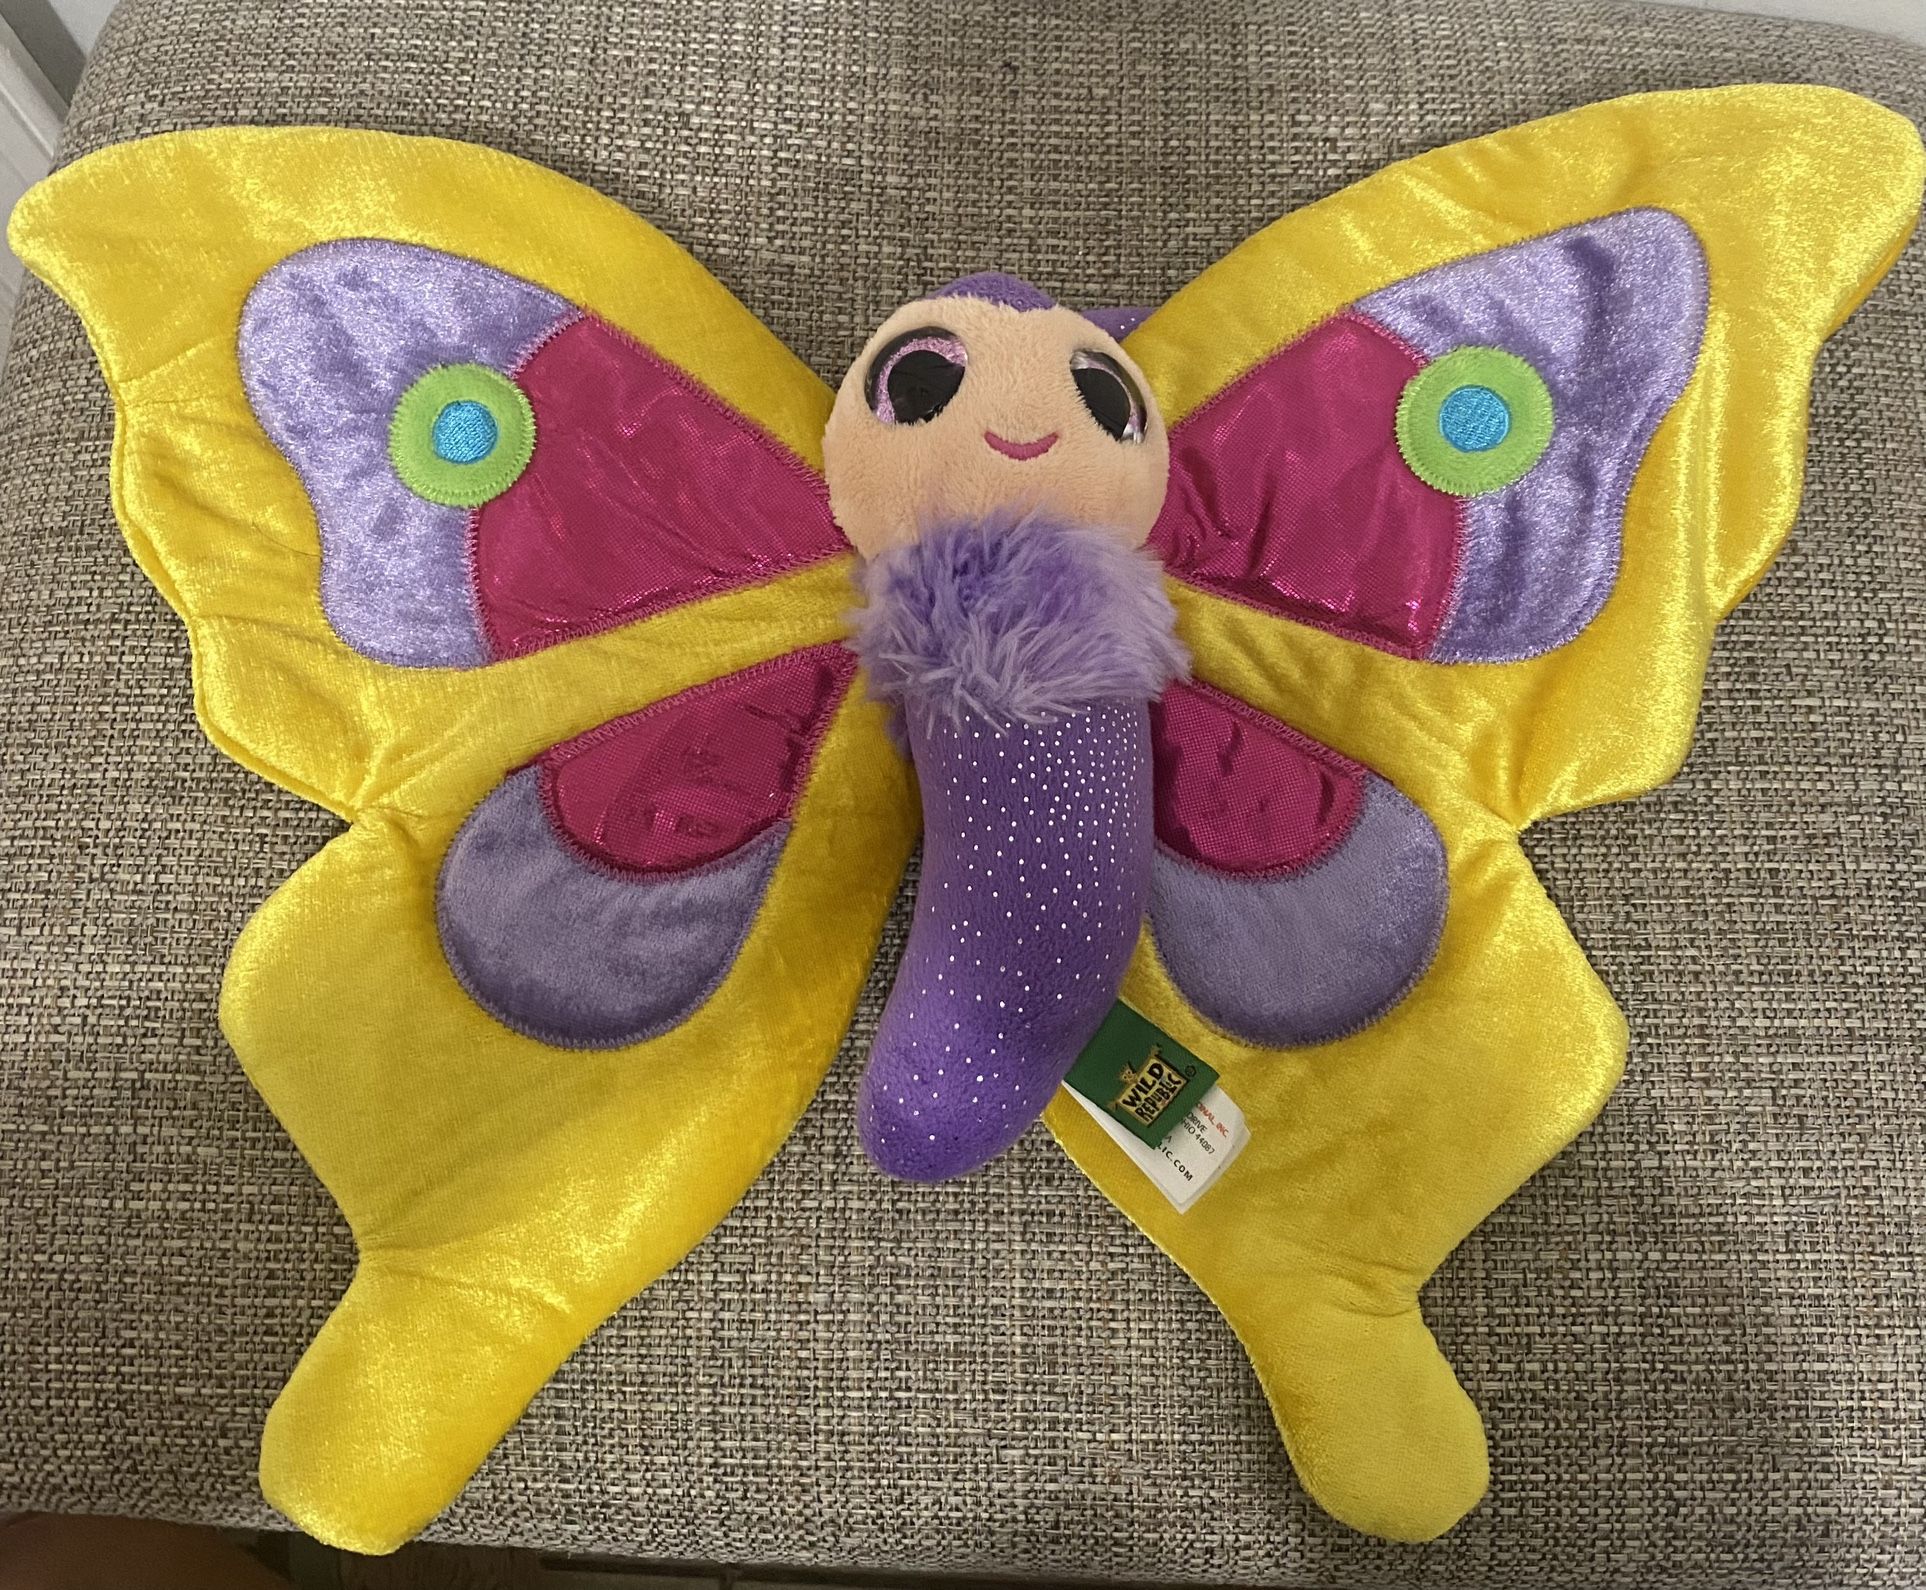 Butterfly Wild Republic Purple Velvet Yello 2015 Stuffed Toy Bug 17" wings plush